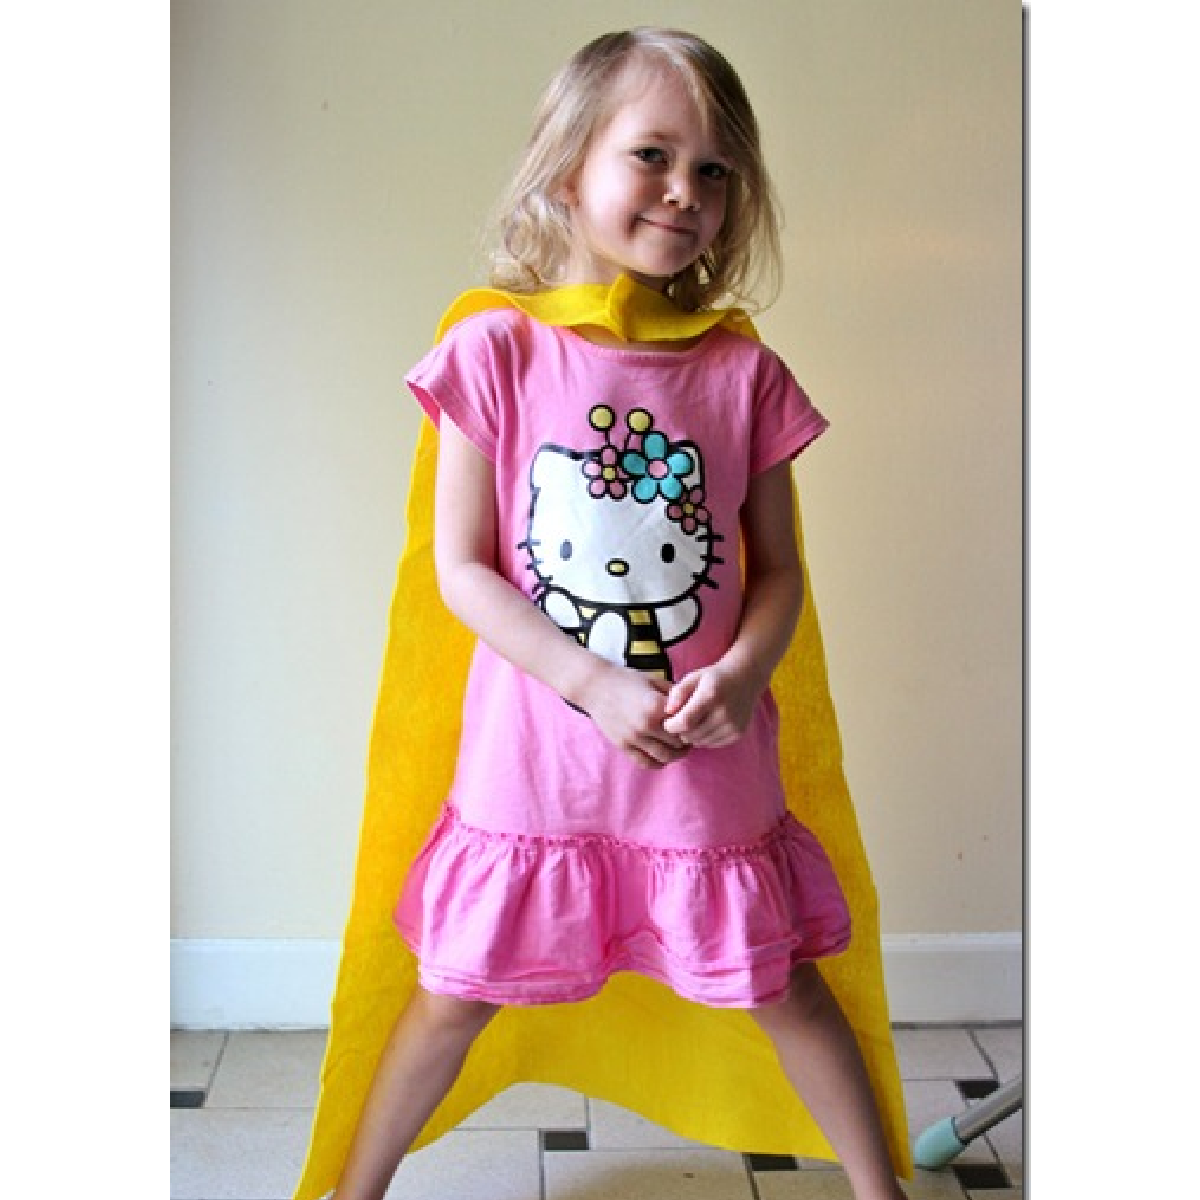 dress up ideas- super hero cape yellow on little girl with pink dress- kids activities blog